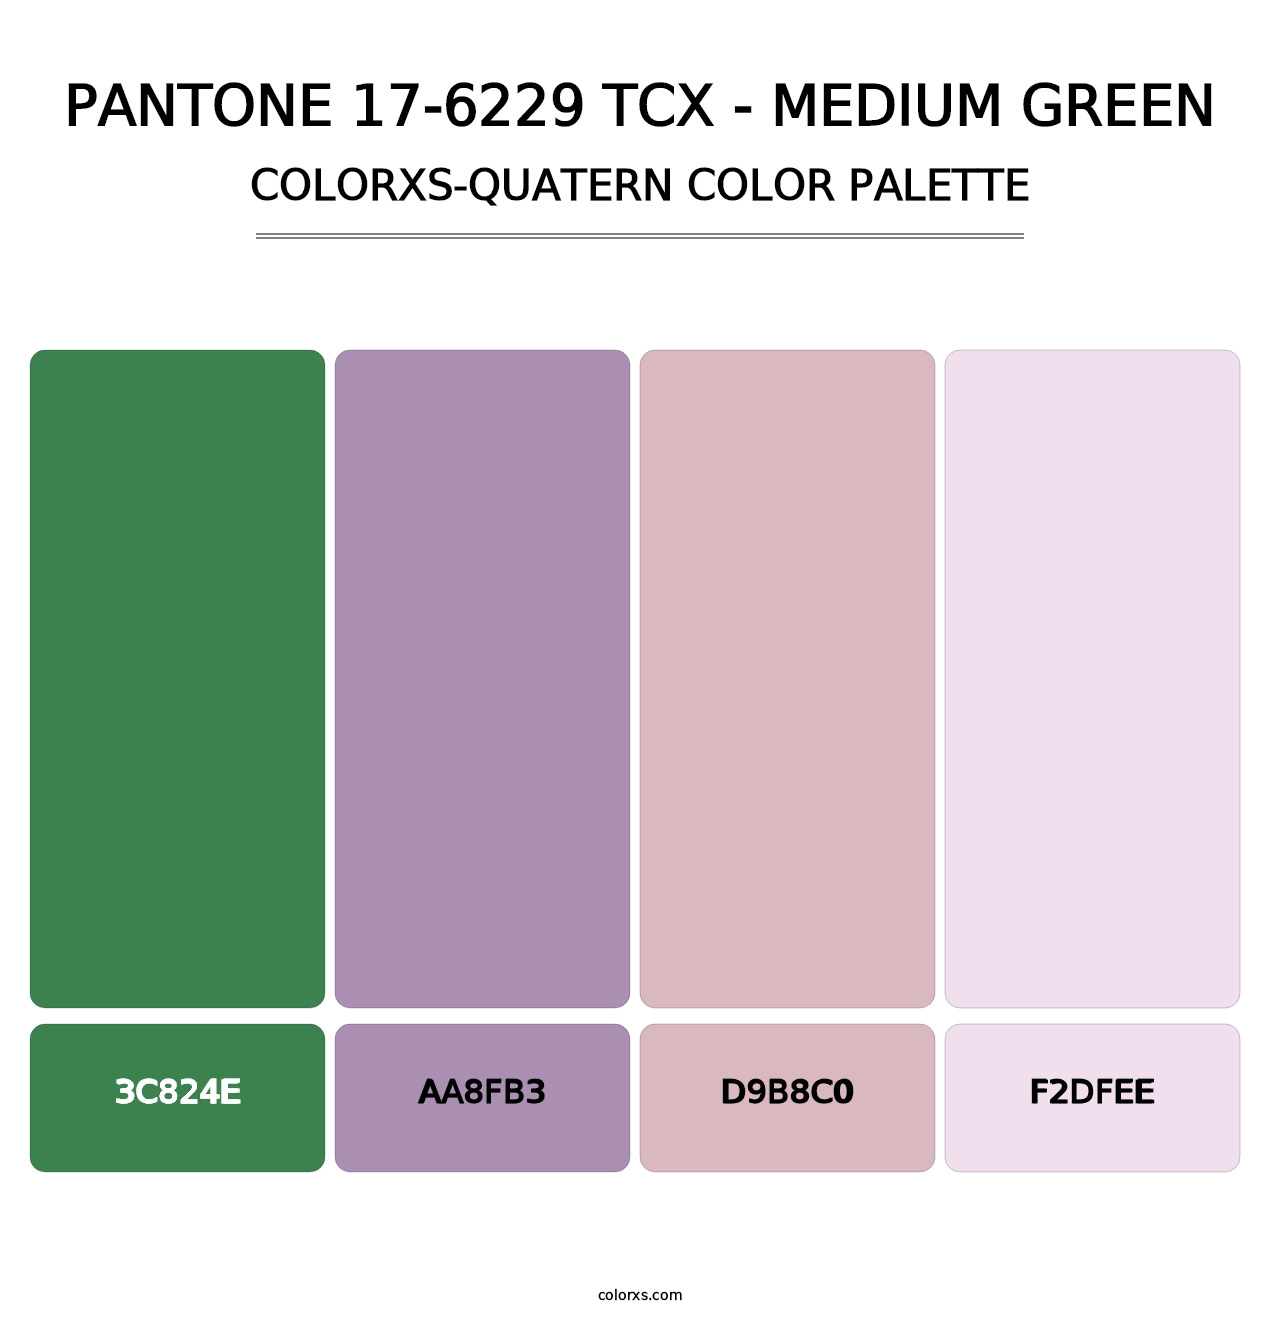 PANTONE 17-6229 TCX - Medium Green - Colorxs Quatern Palette